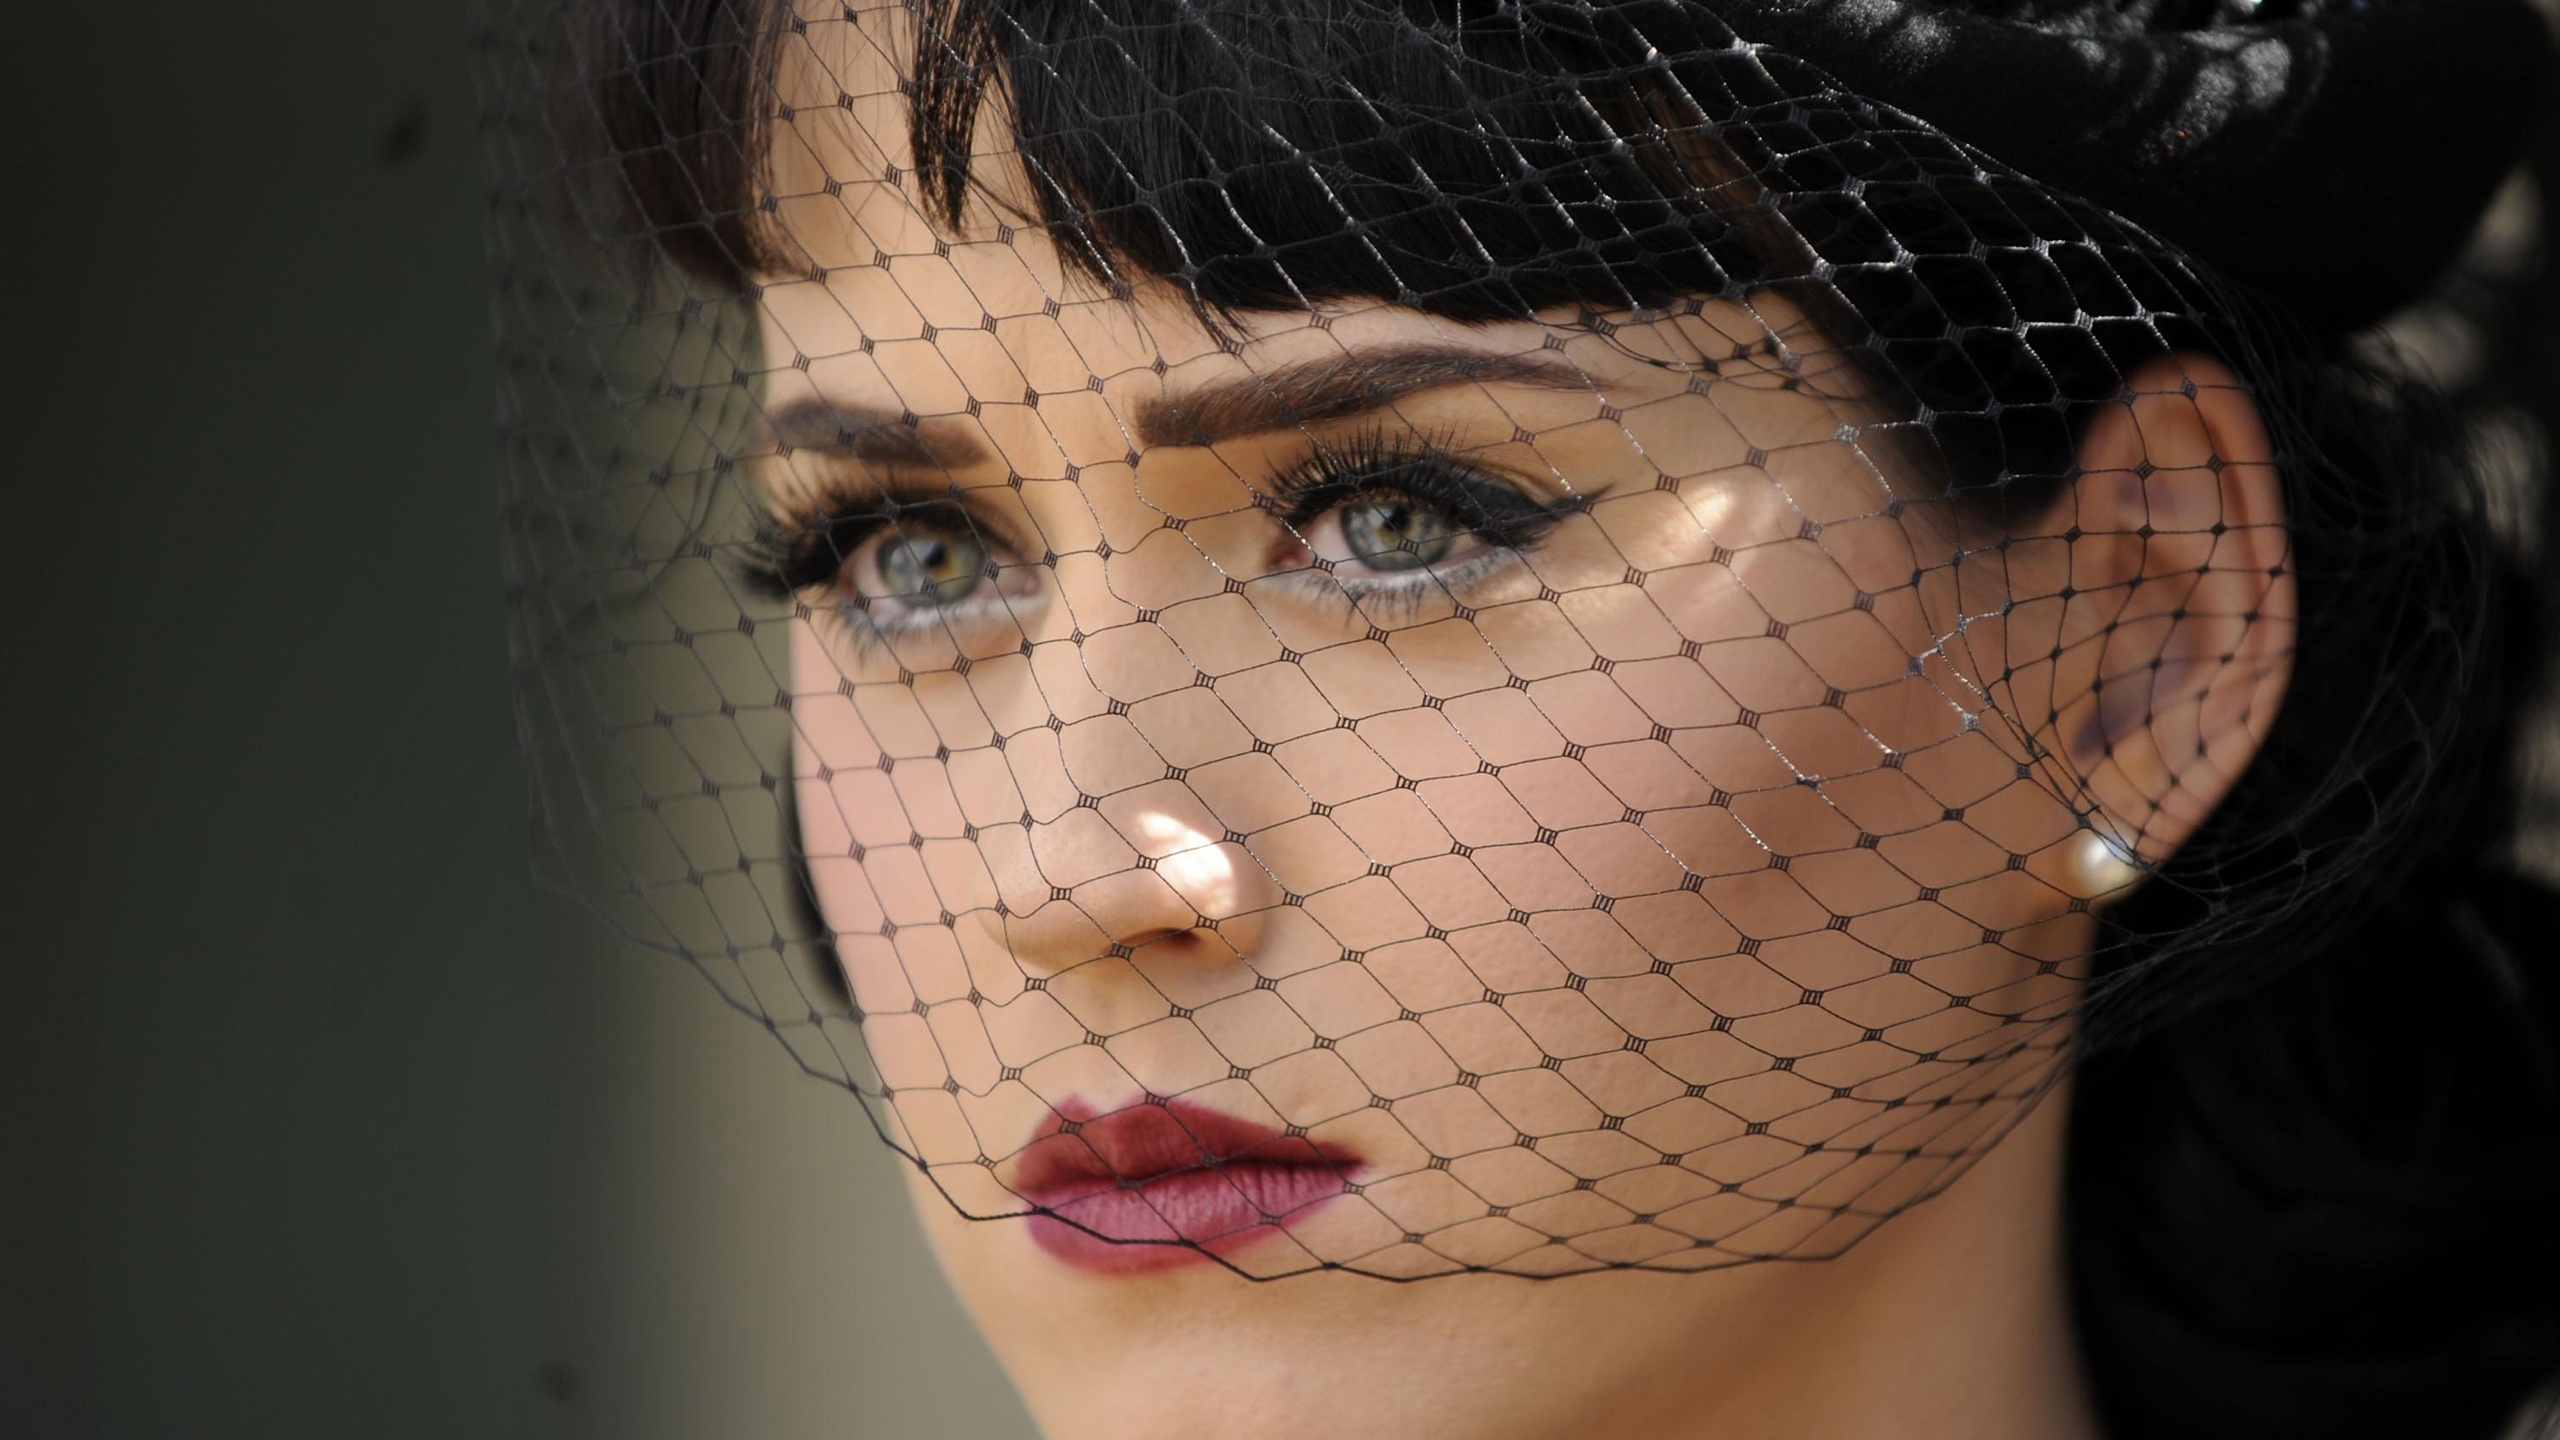 Katy Perry Sad for 2560x1440 HDTV resolution